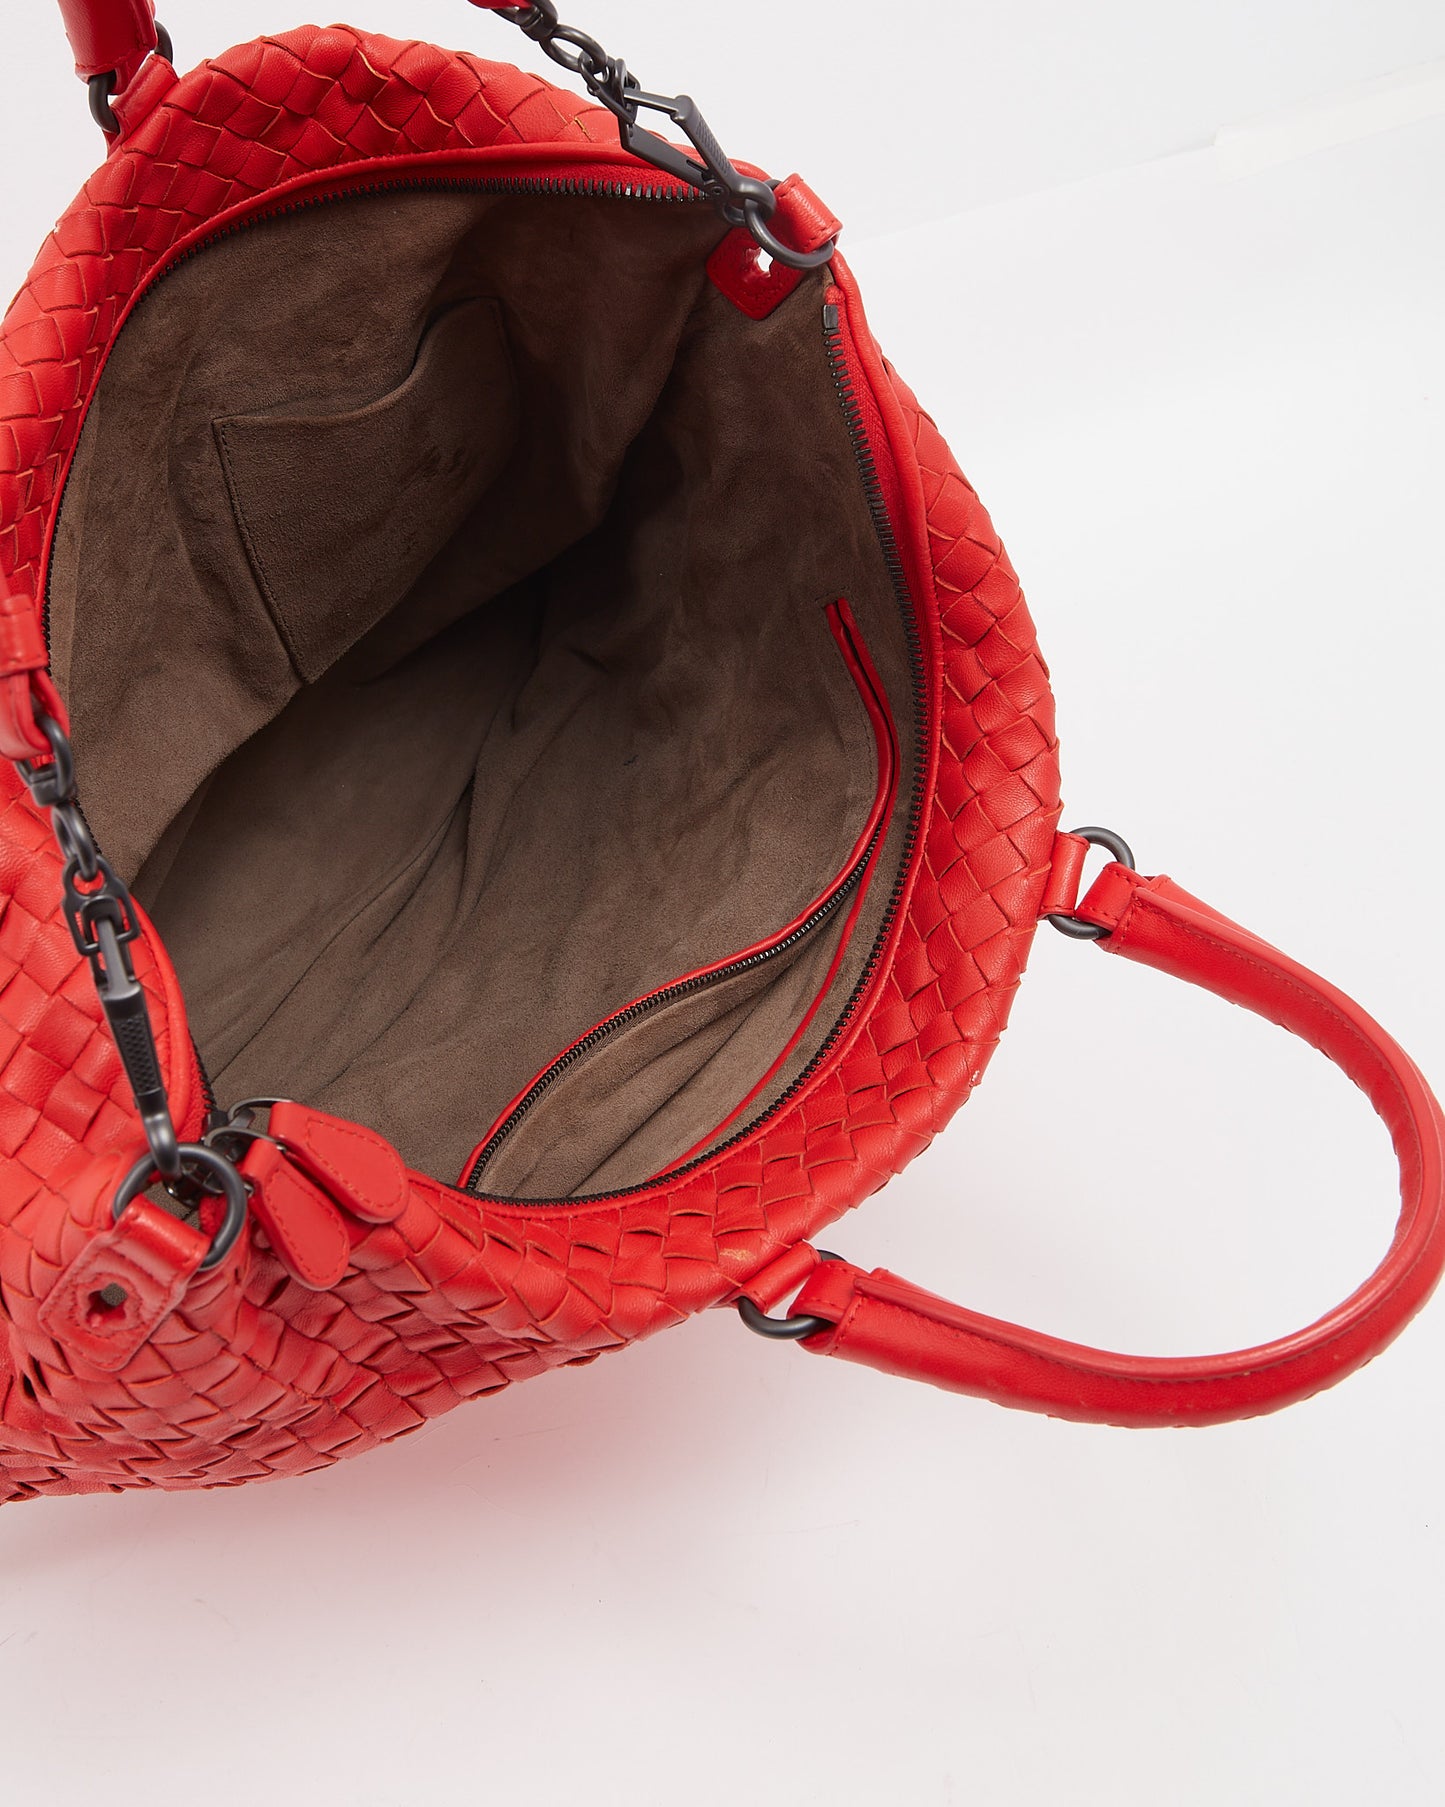 Bottega Veneta Red Intrecciato Leather Convertible Tote Bag